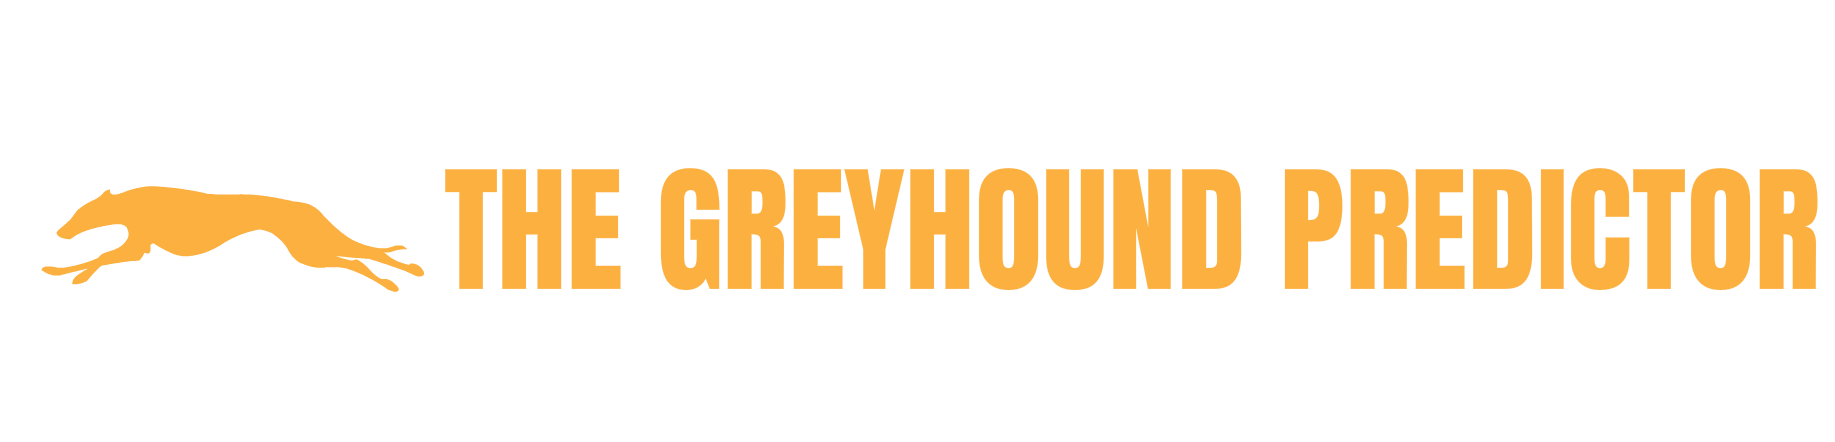 The Greyhound Predictor